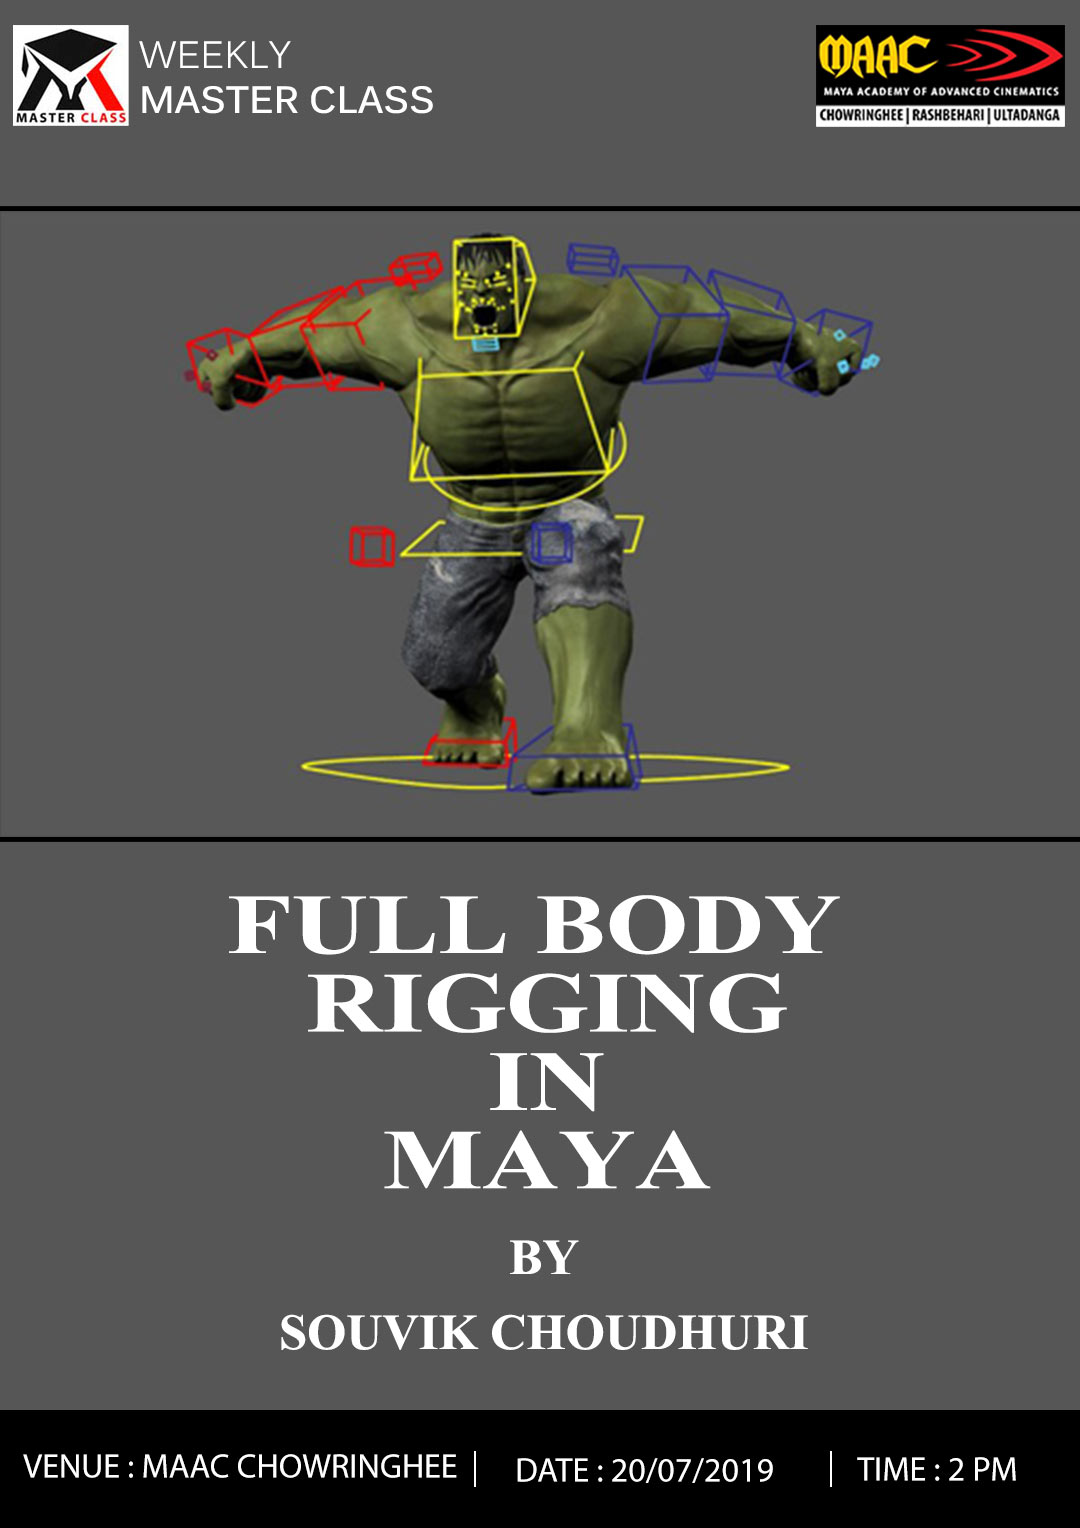 Weekly Master Class on Full Body Rigging in MAYA